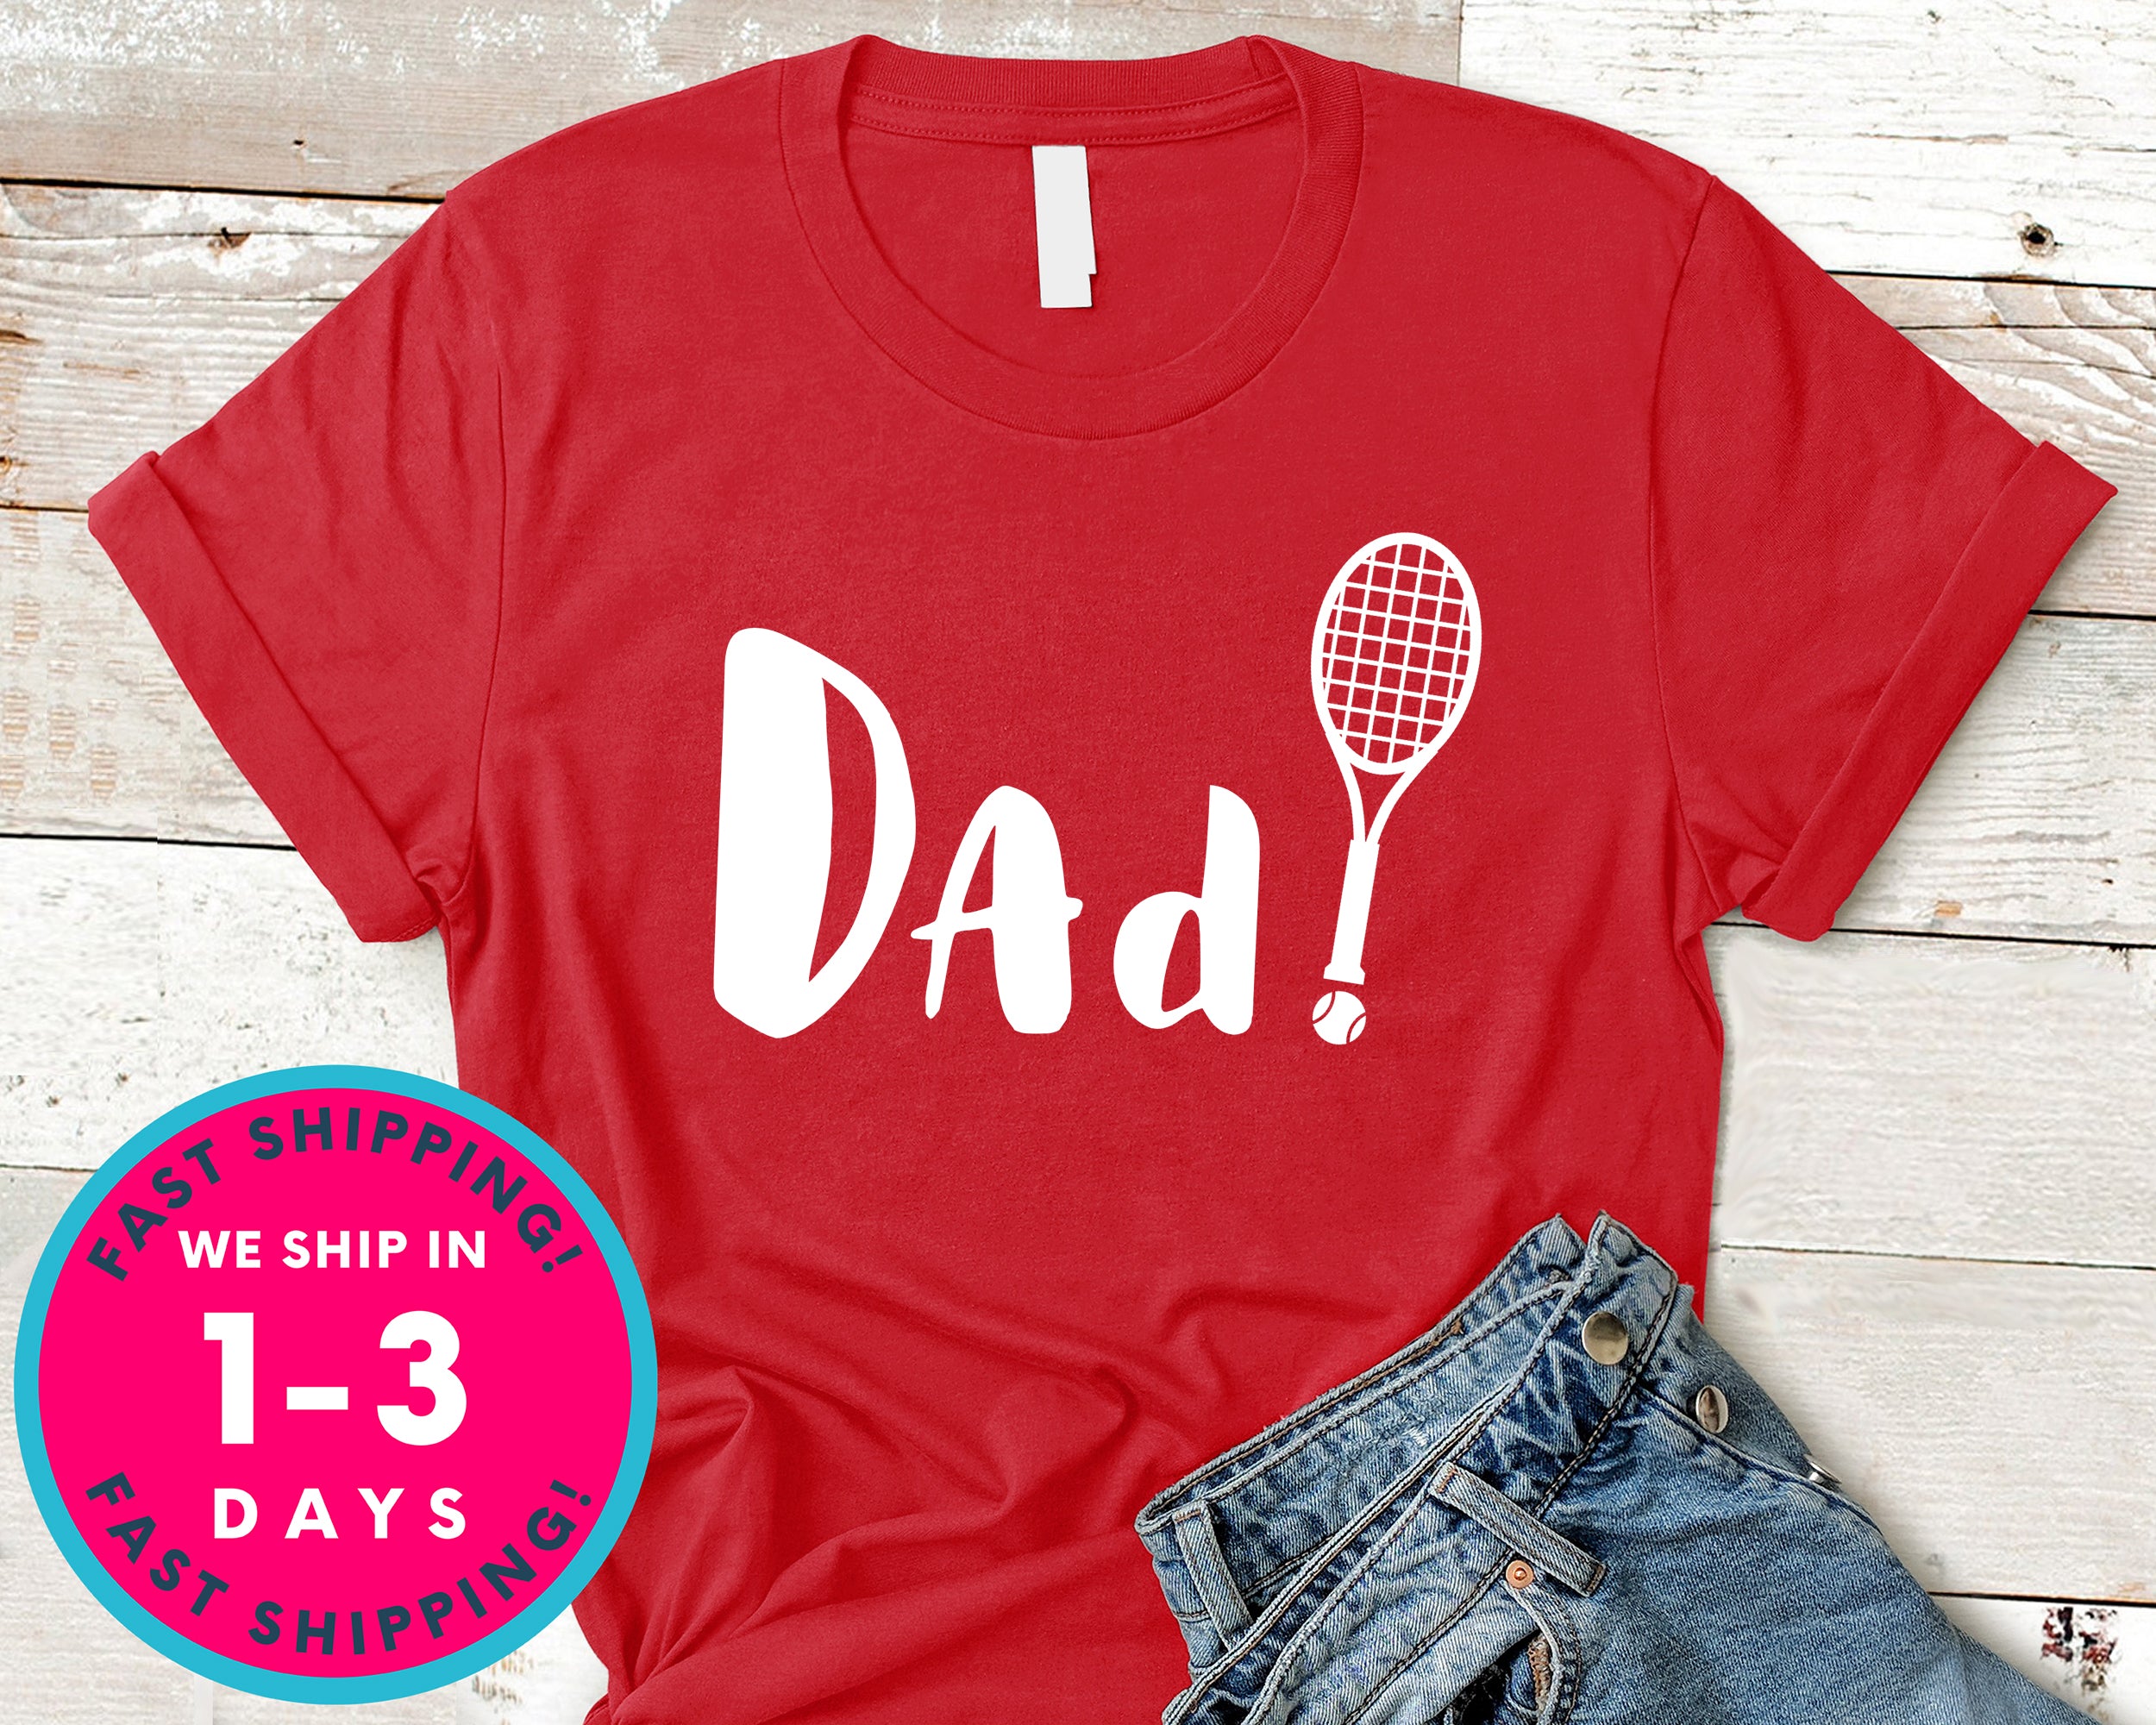 Men's Tennis Dad Shirt Father Gift T-Shirt - Sports Shirt